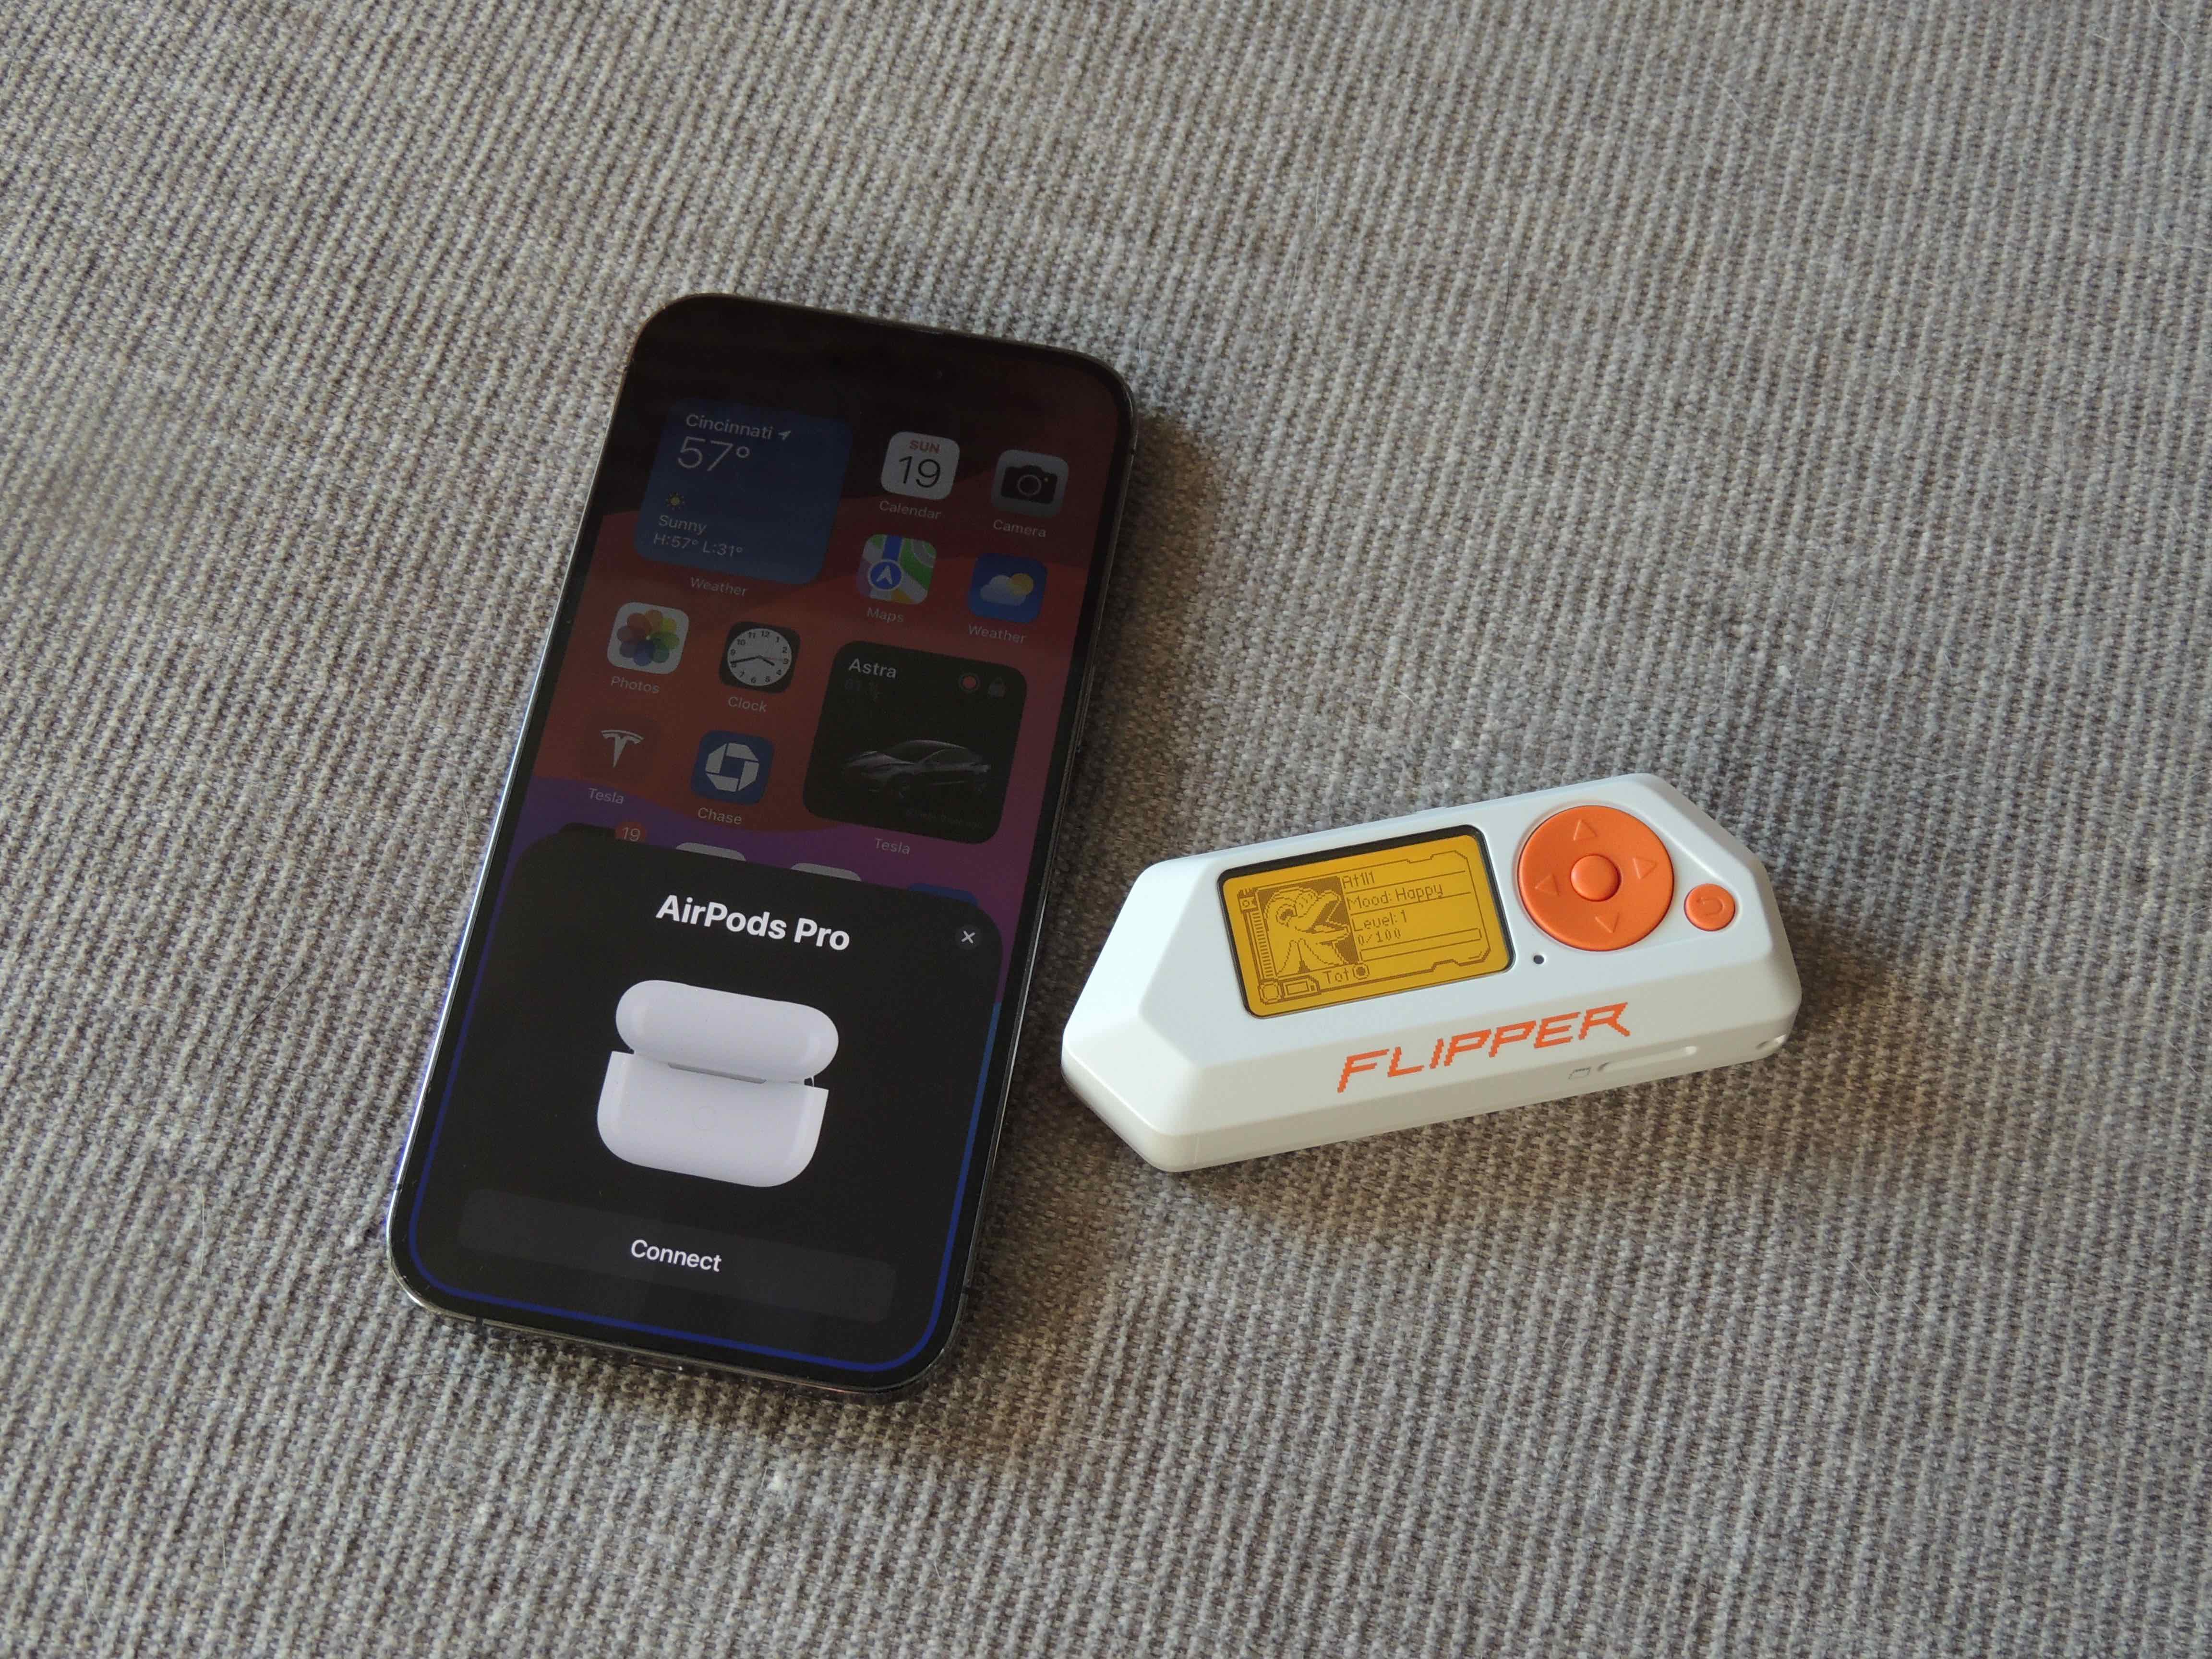 Flipper Zero can still crash iPhones running the latest version of